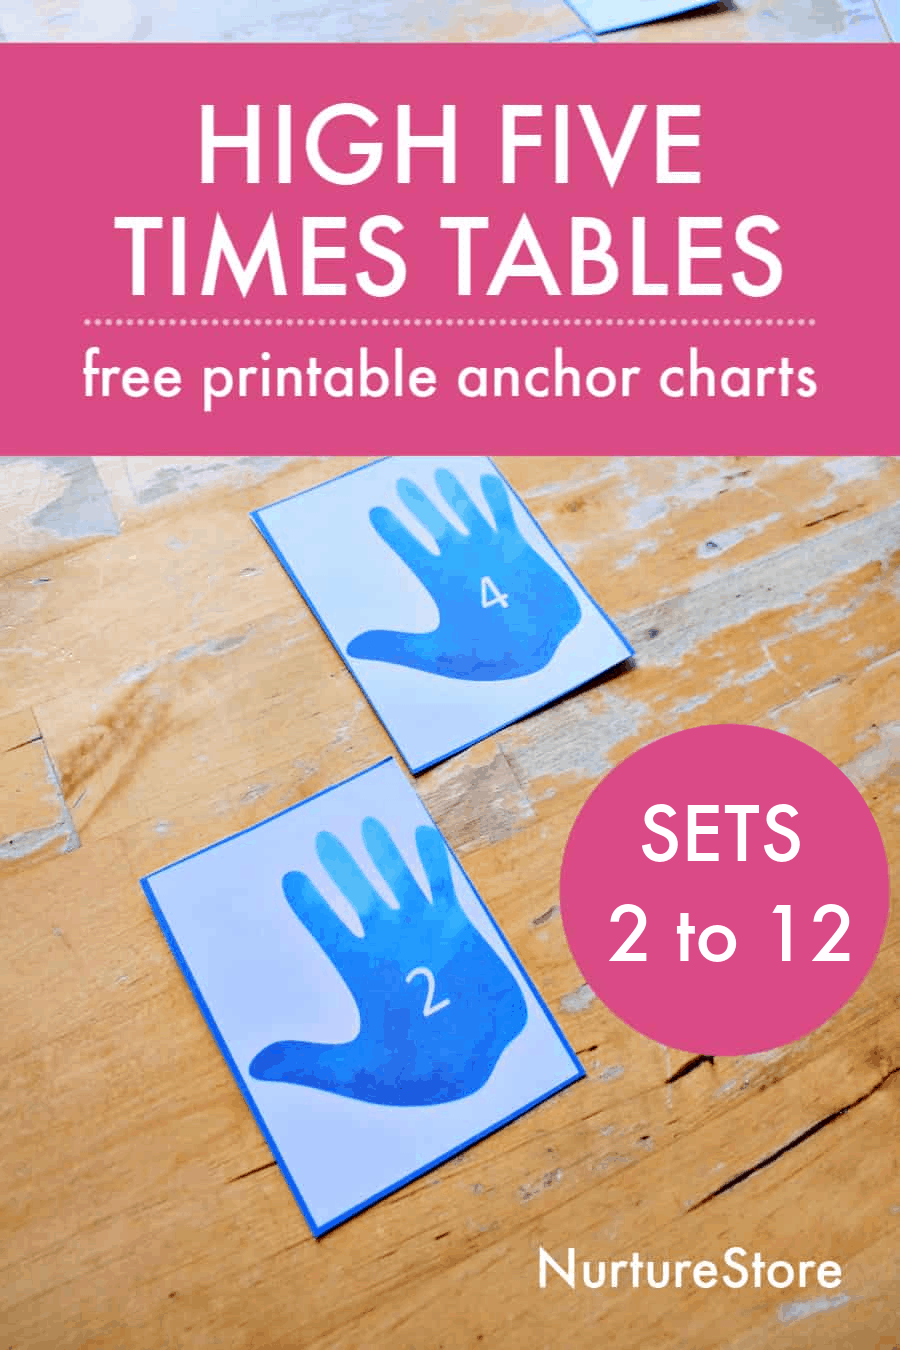 free-printable-times-table-chart-uk-basil-roche